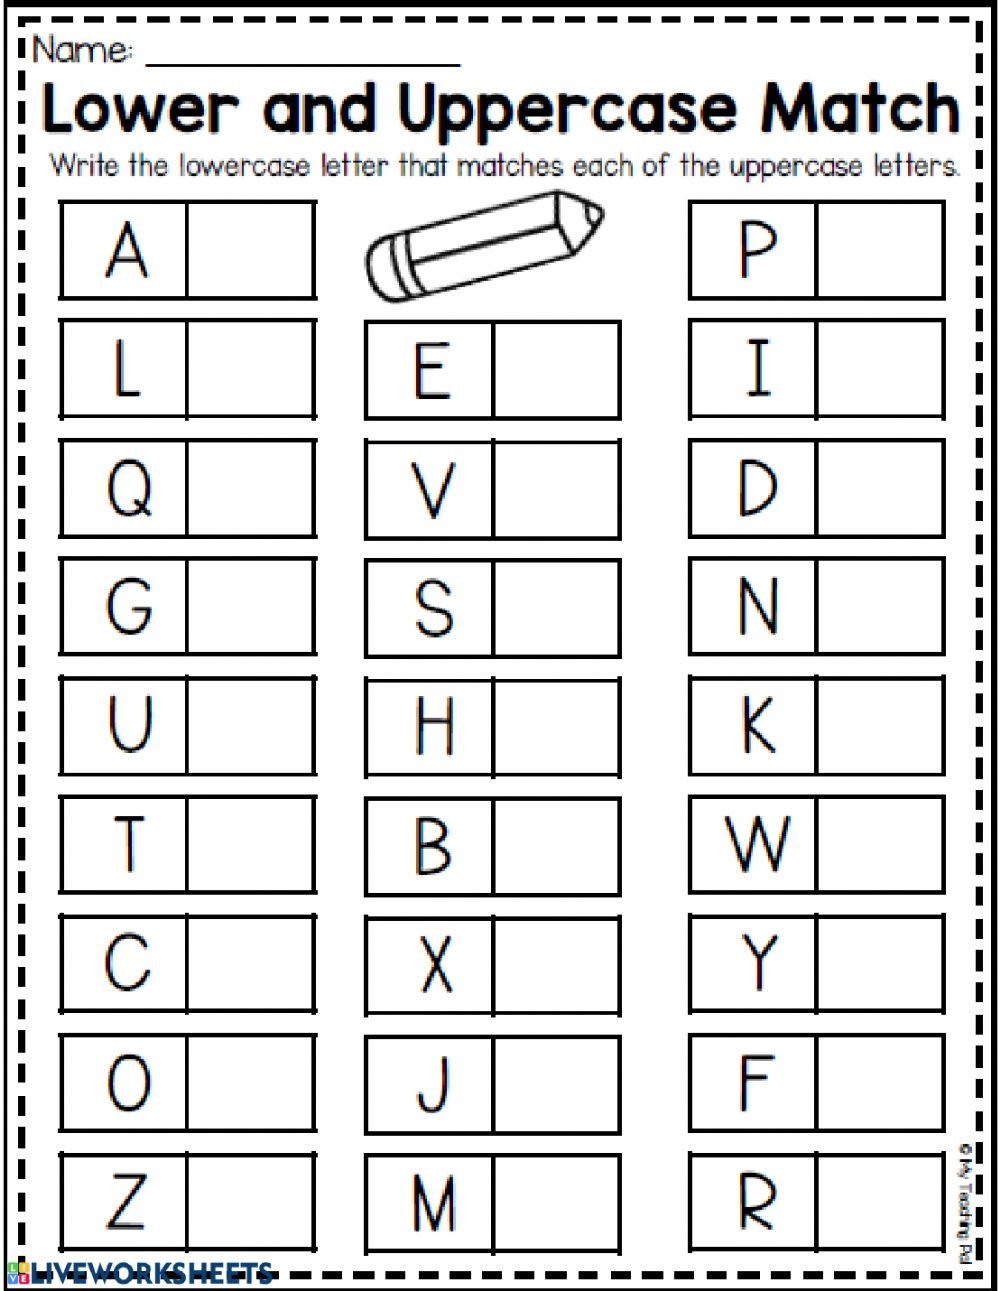 Lower And Uppercase Match - Interactive Worksheet regarding Alphabet Matching Worksheets Pdf